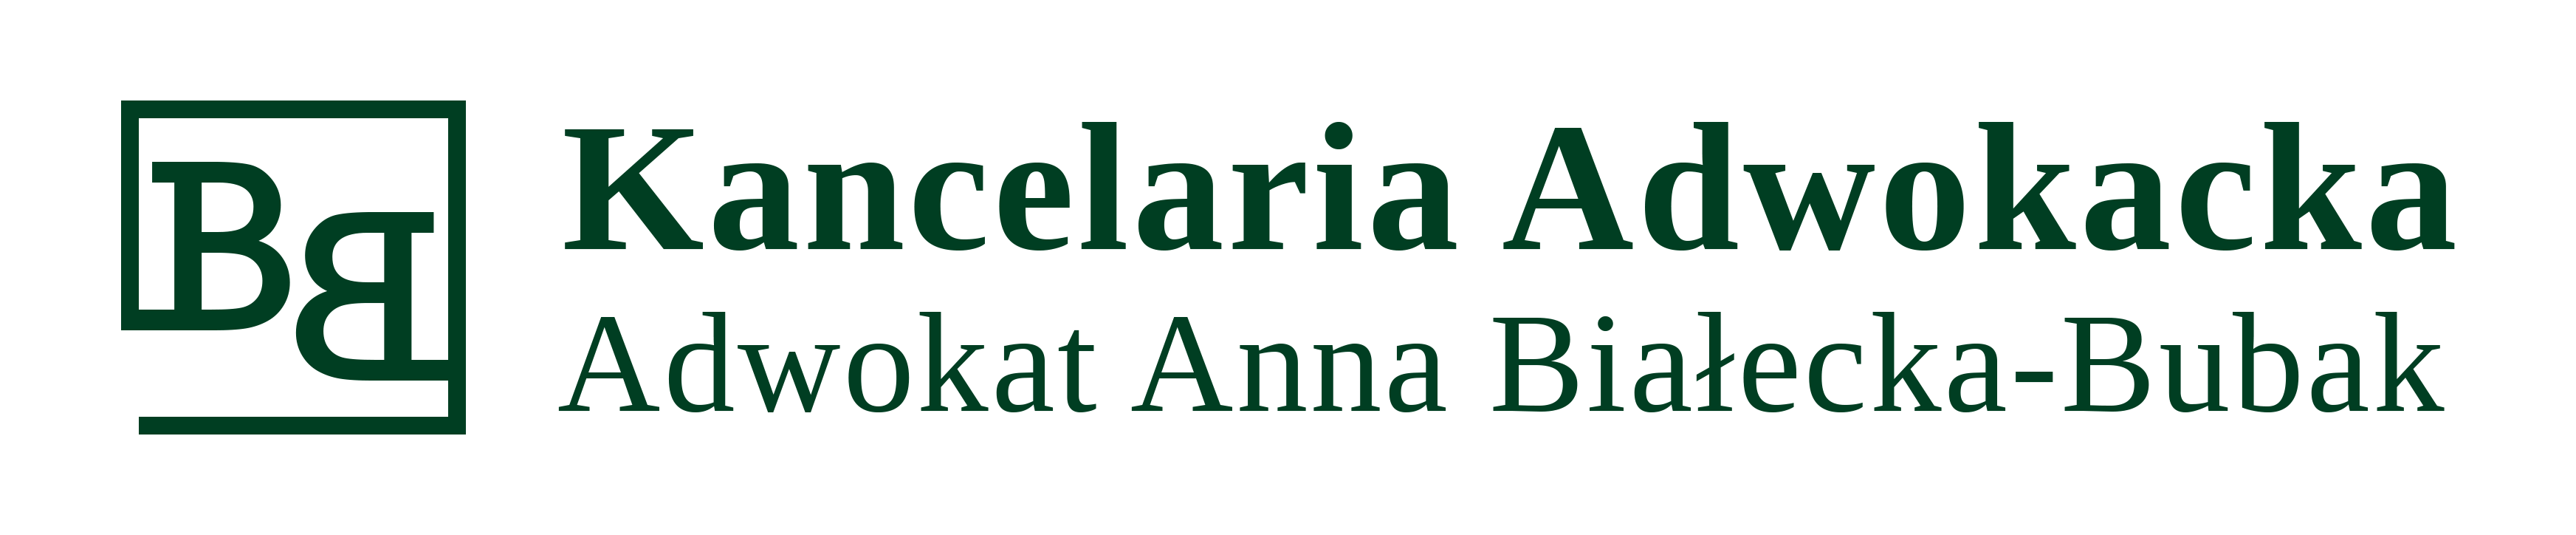 Adwokat Anna Białecka-Bubak